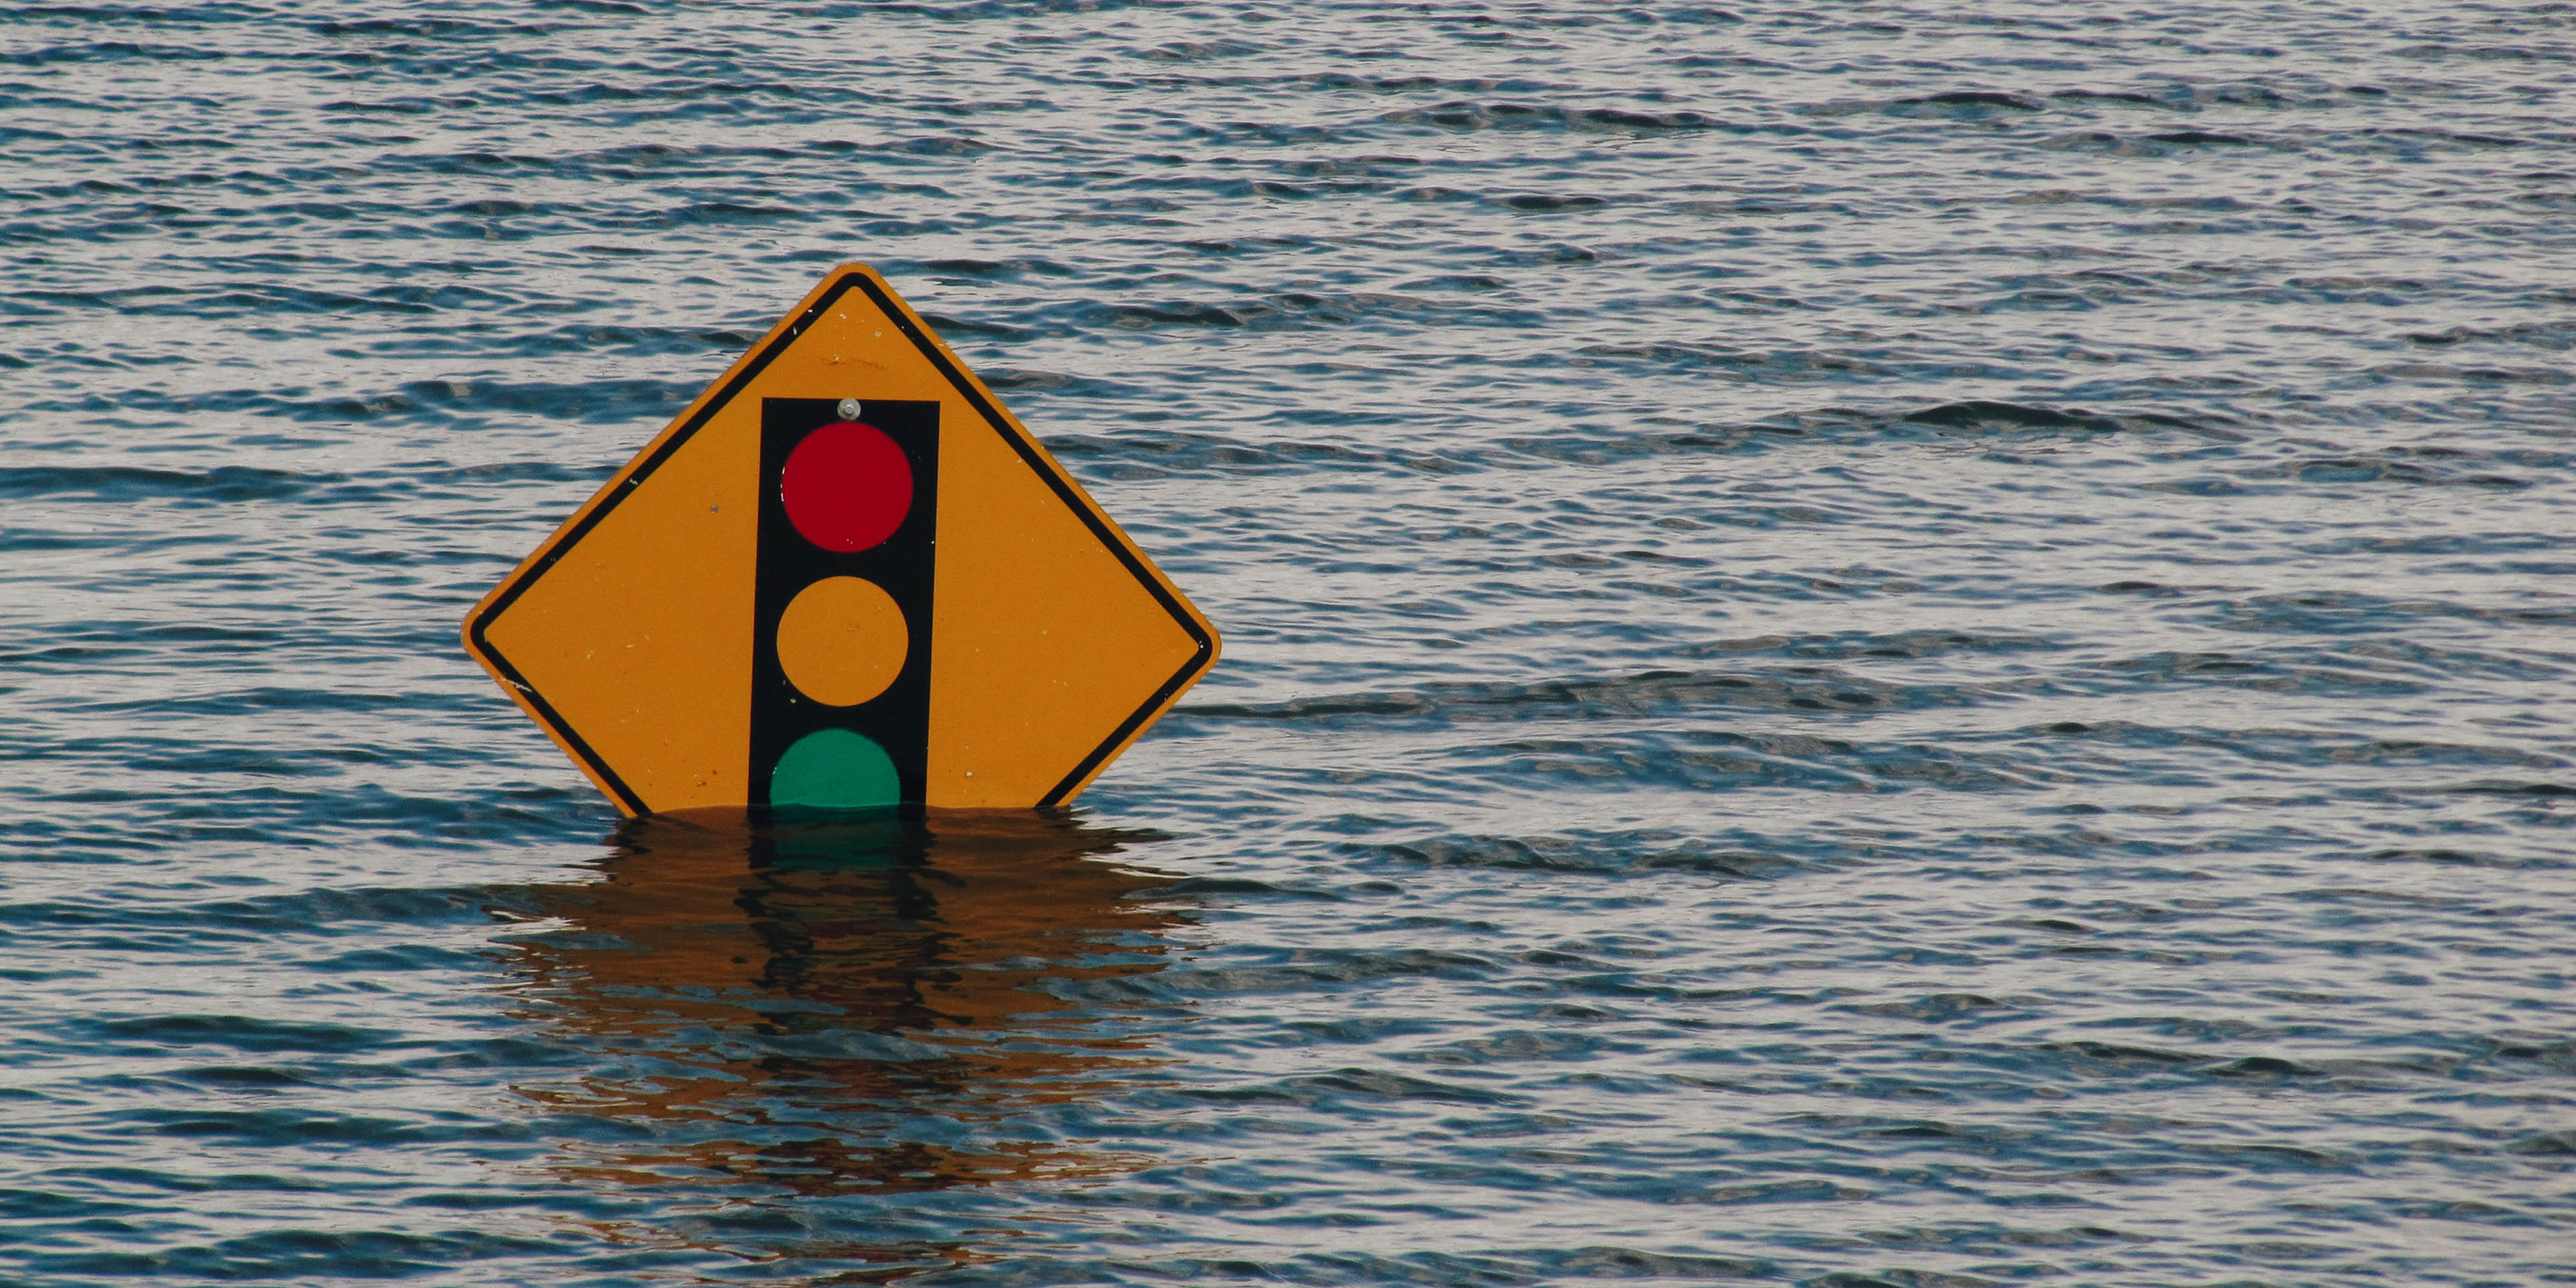 A traffic light street sign in high flood water.